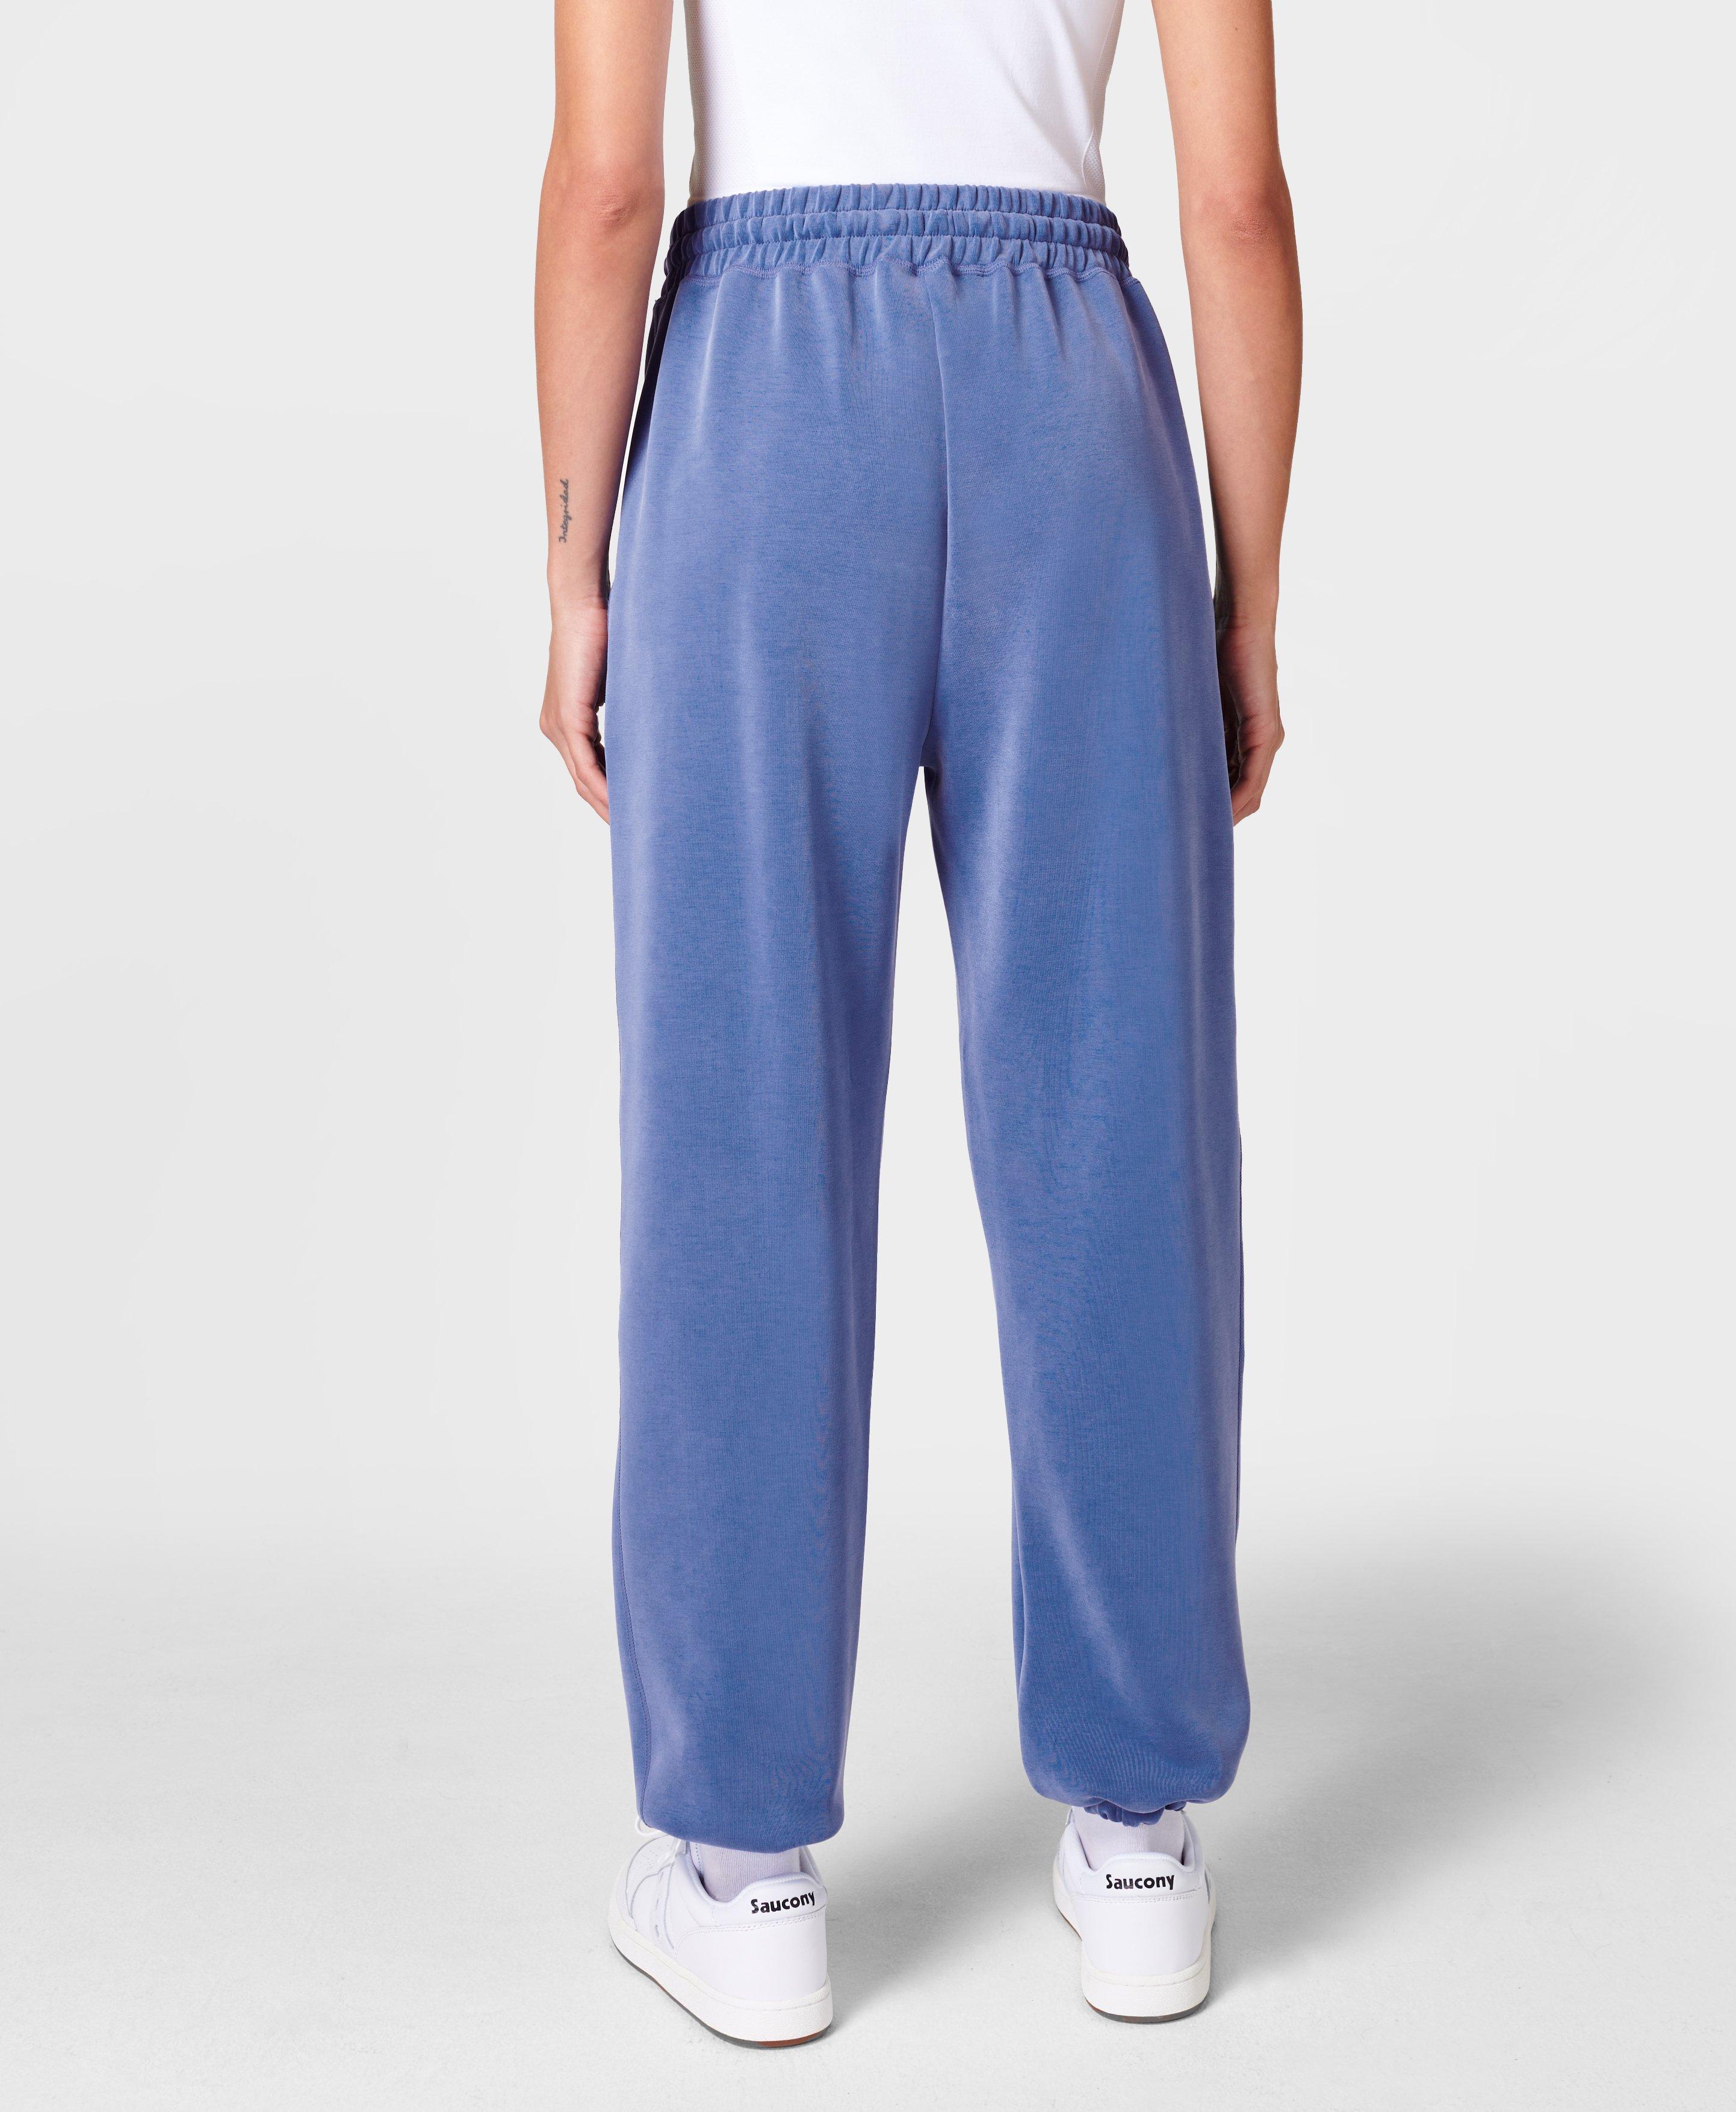 Sand Wash Cuffed Trousers - Lightning Blue, Women's Trousers & Yoga Pants